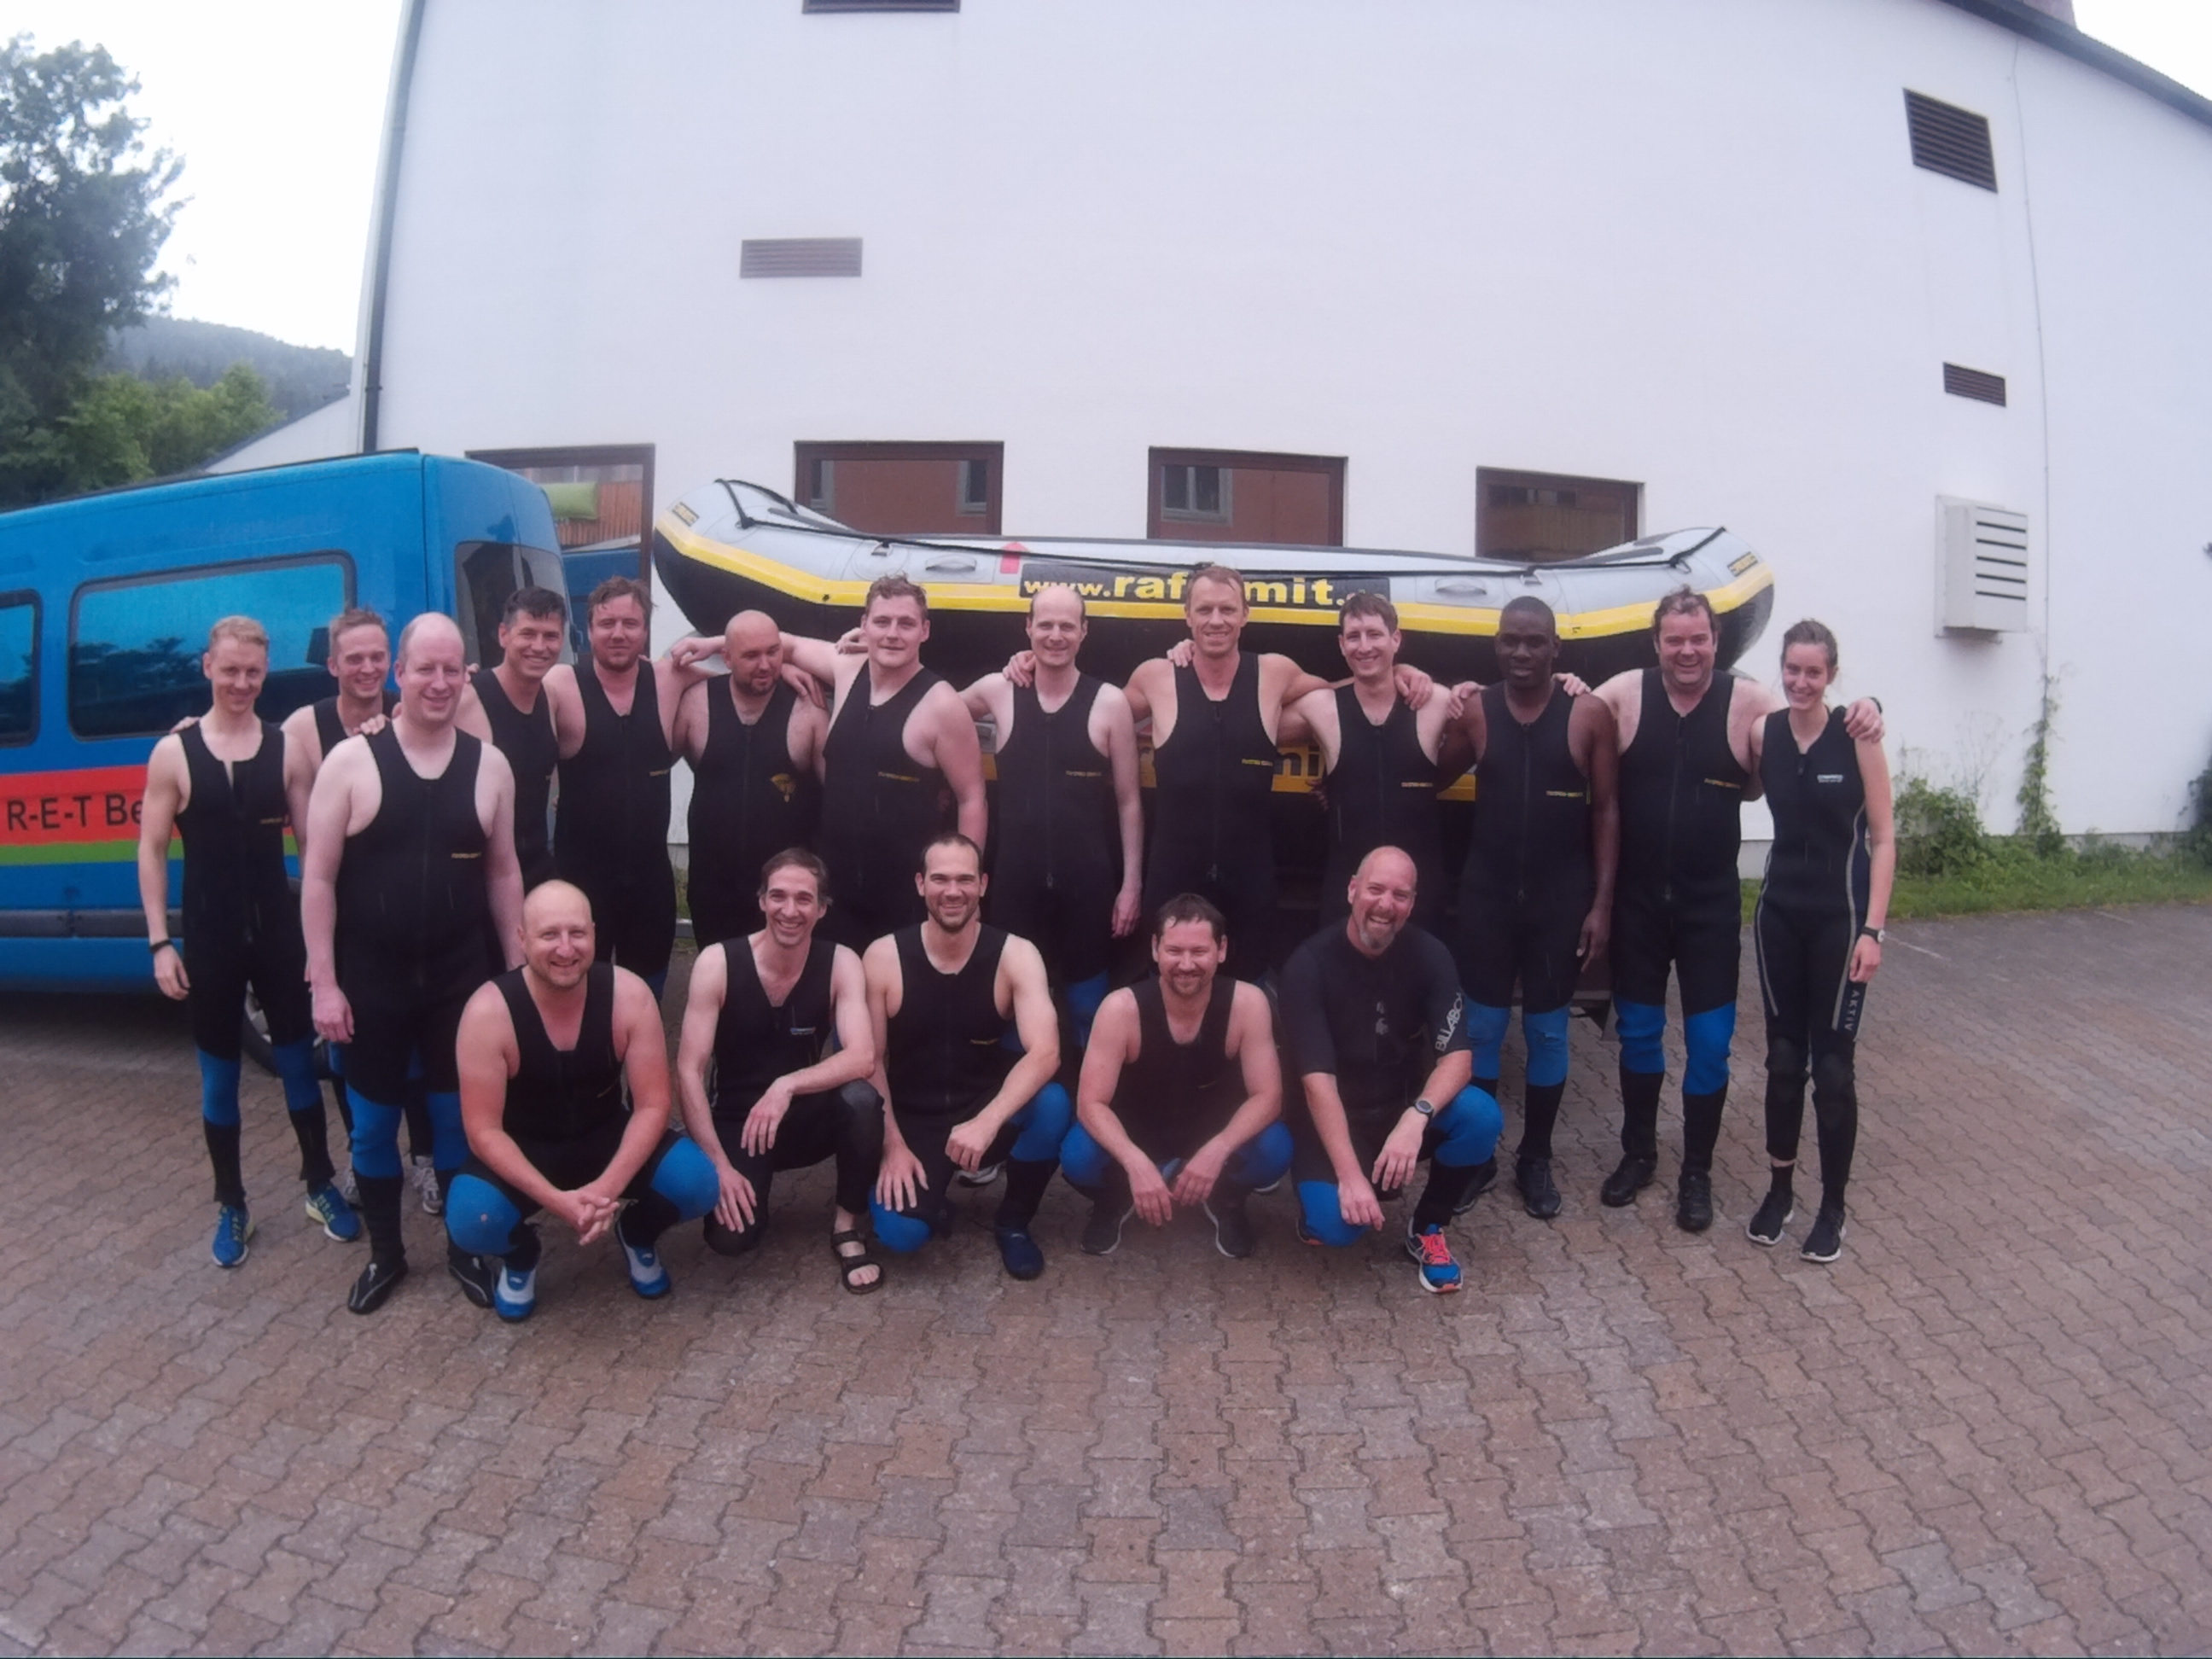 ZPARTNER Sommermeeting 2019. Ein Teamfoto beim Rafting.